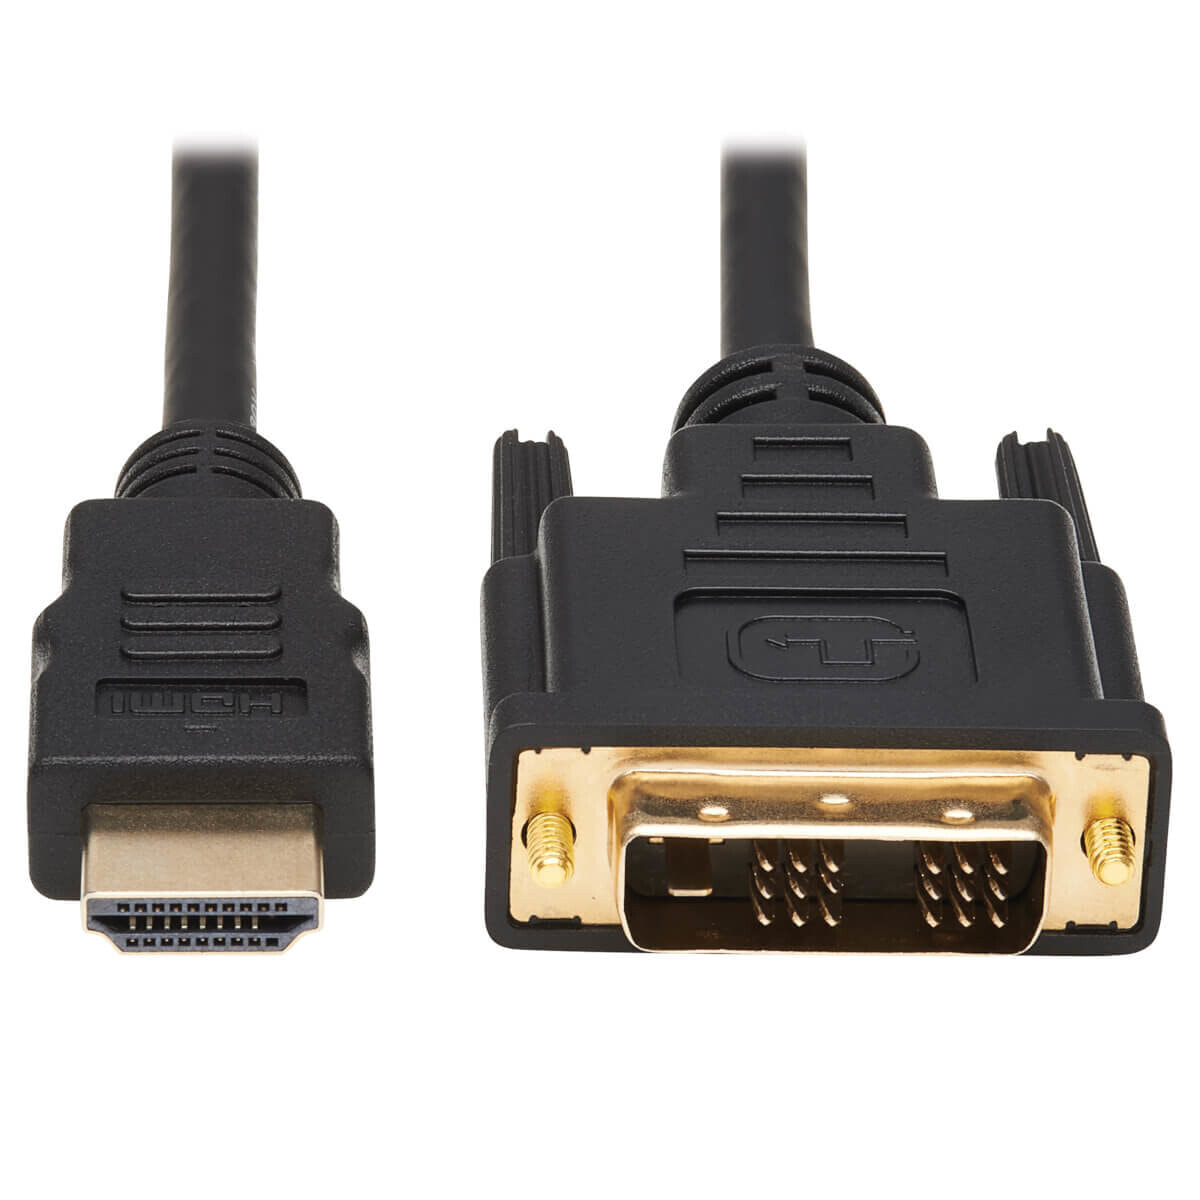 Tripp Lite P566AB-006 видео кабель адаптер 1,83 m HDMI Тип A (Стандарт) DVI-D Черный